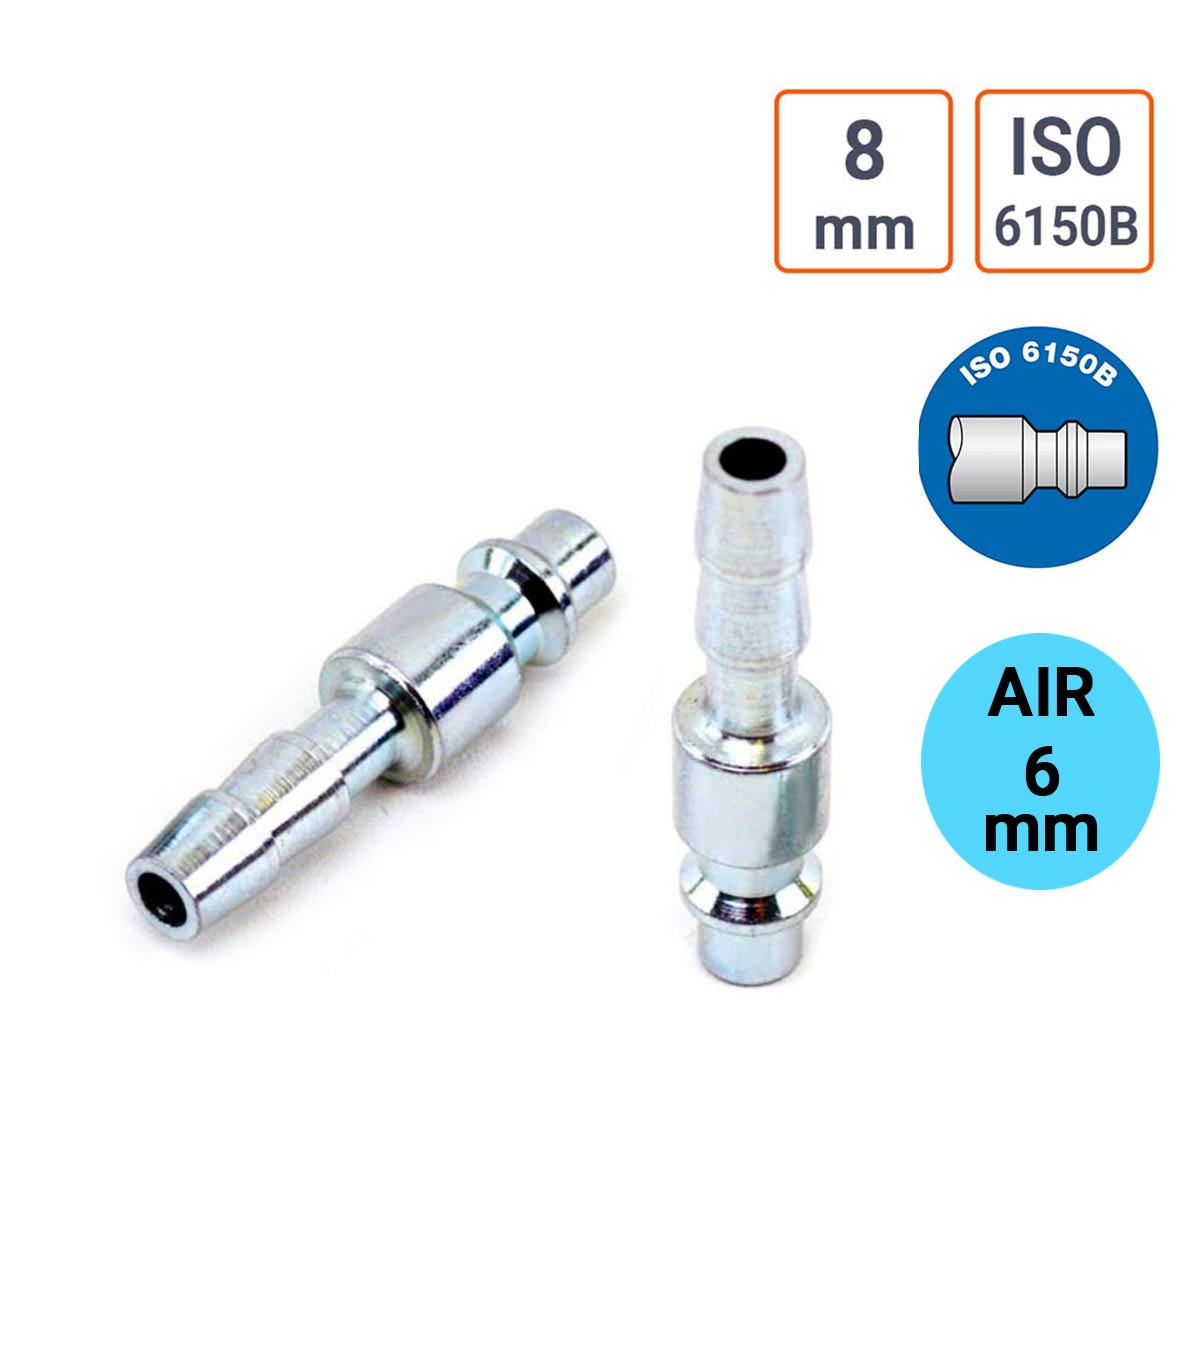 Embout passage air 6mm type ISO 6150B pour tuyau diamètre 8 mm